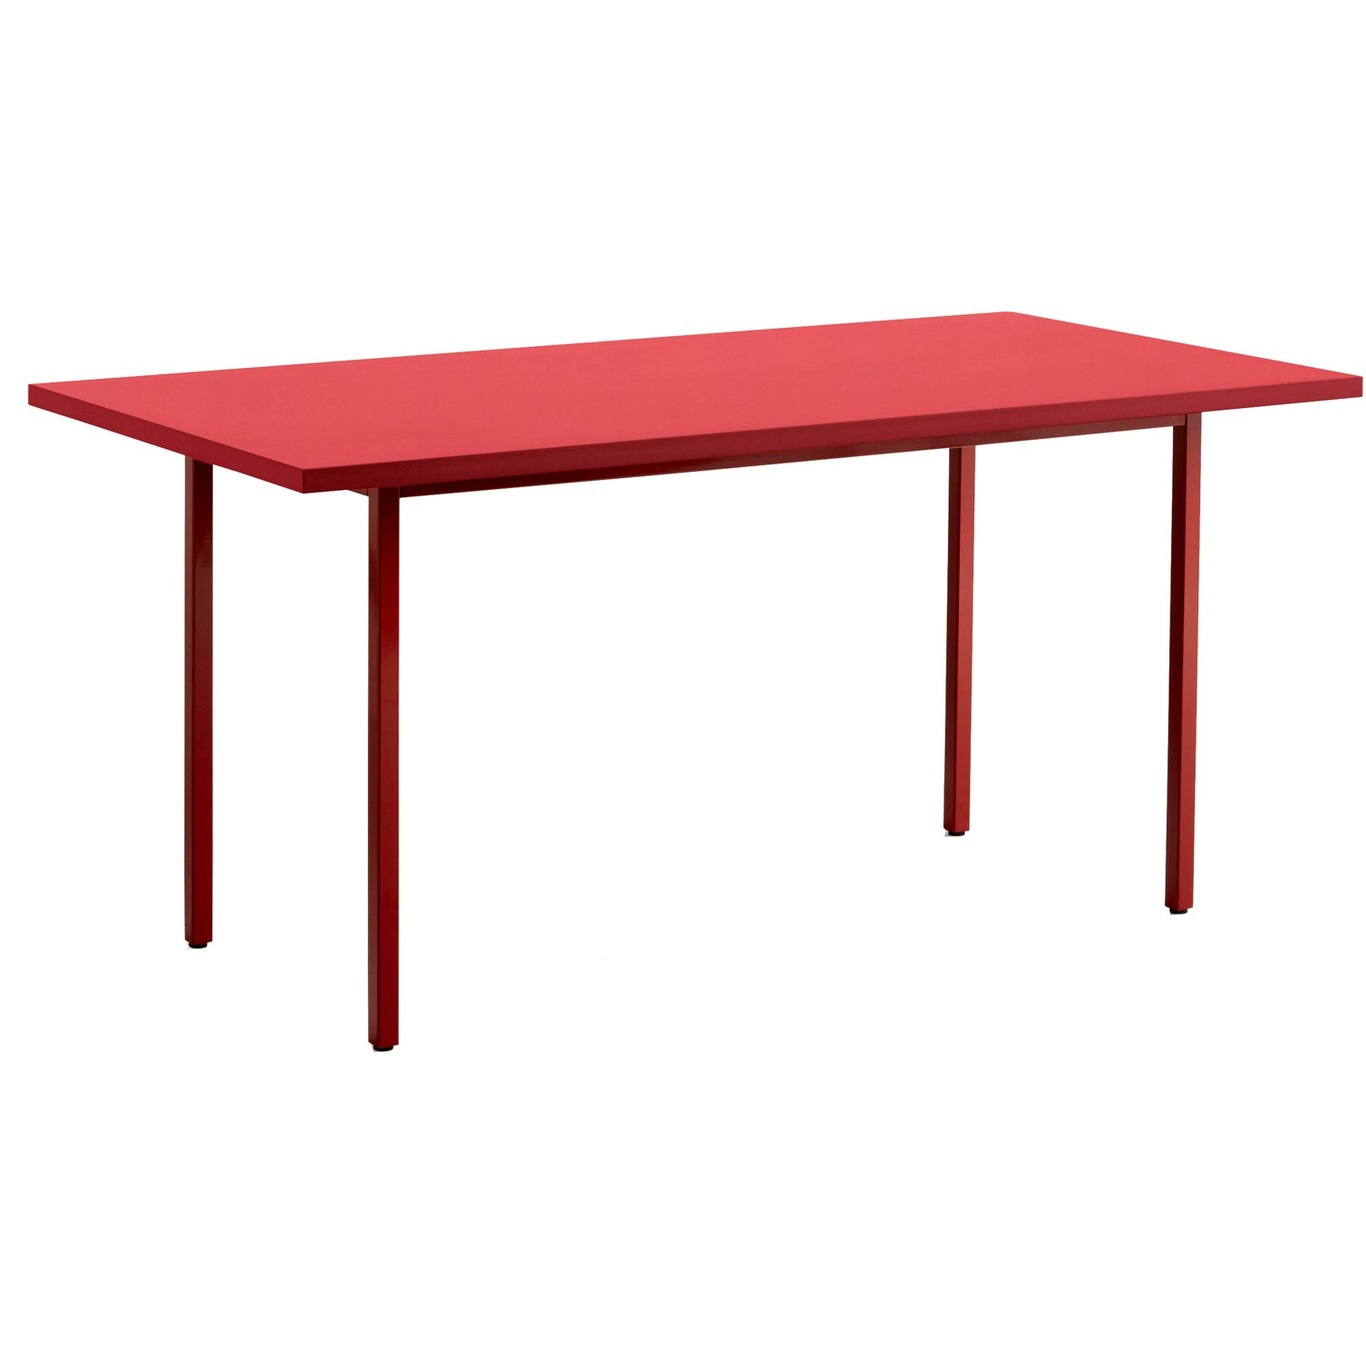 Two-Colour Tisch 160x82 cm, Weinrot / Rot